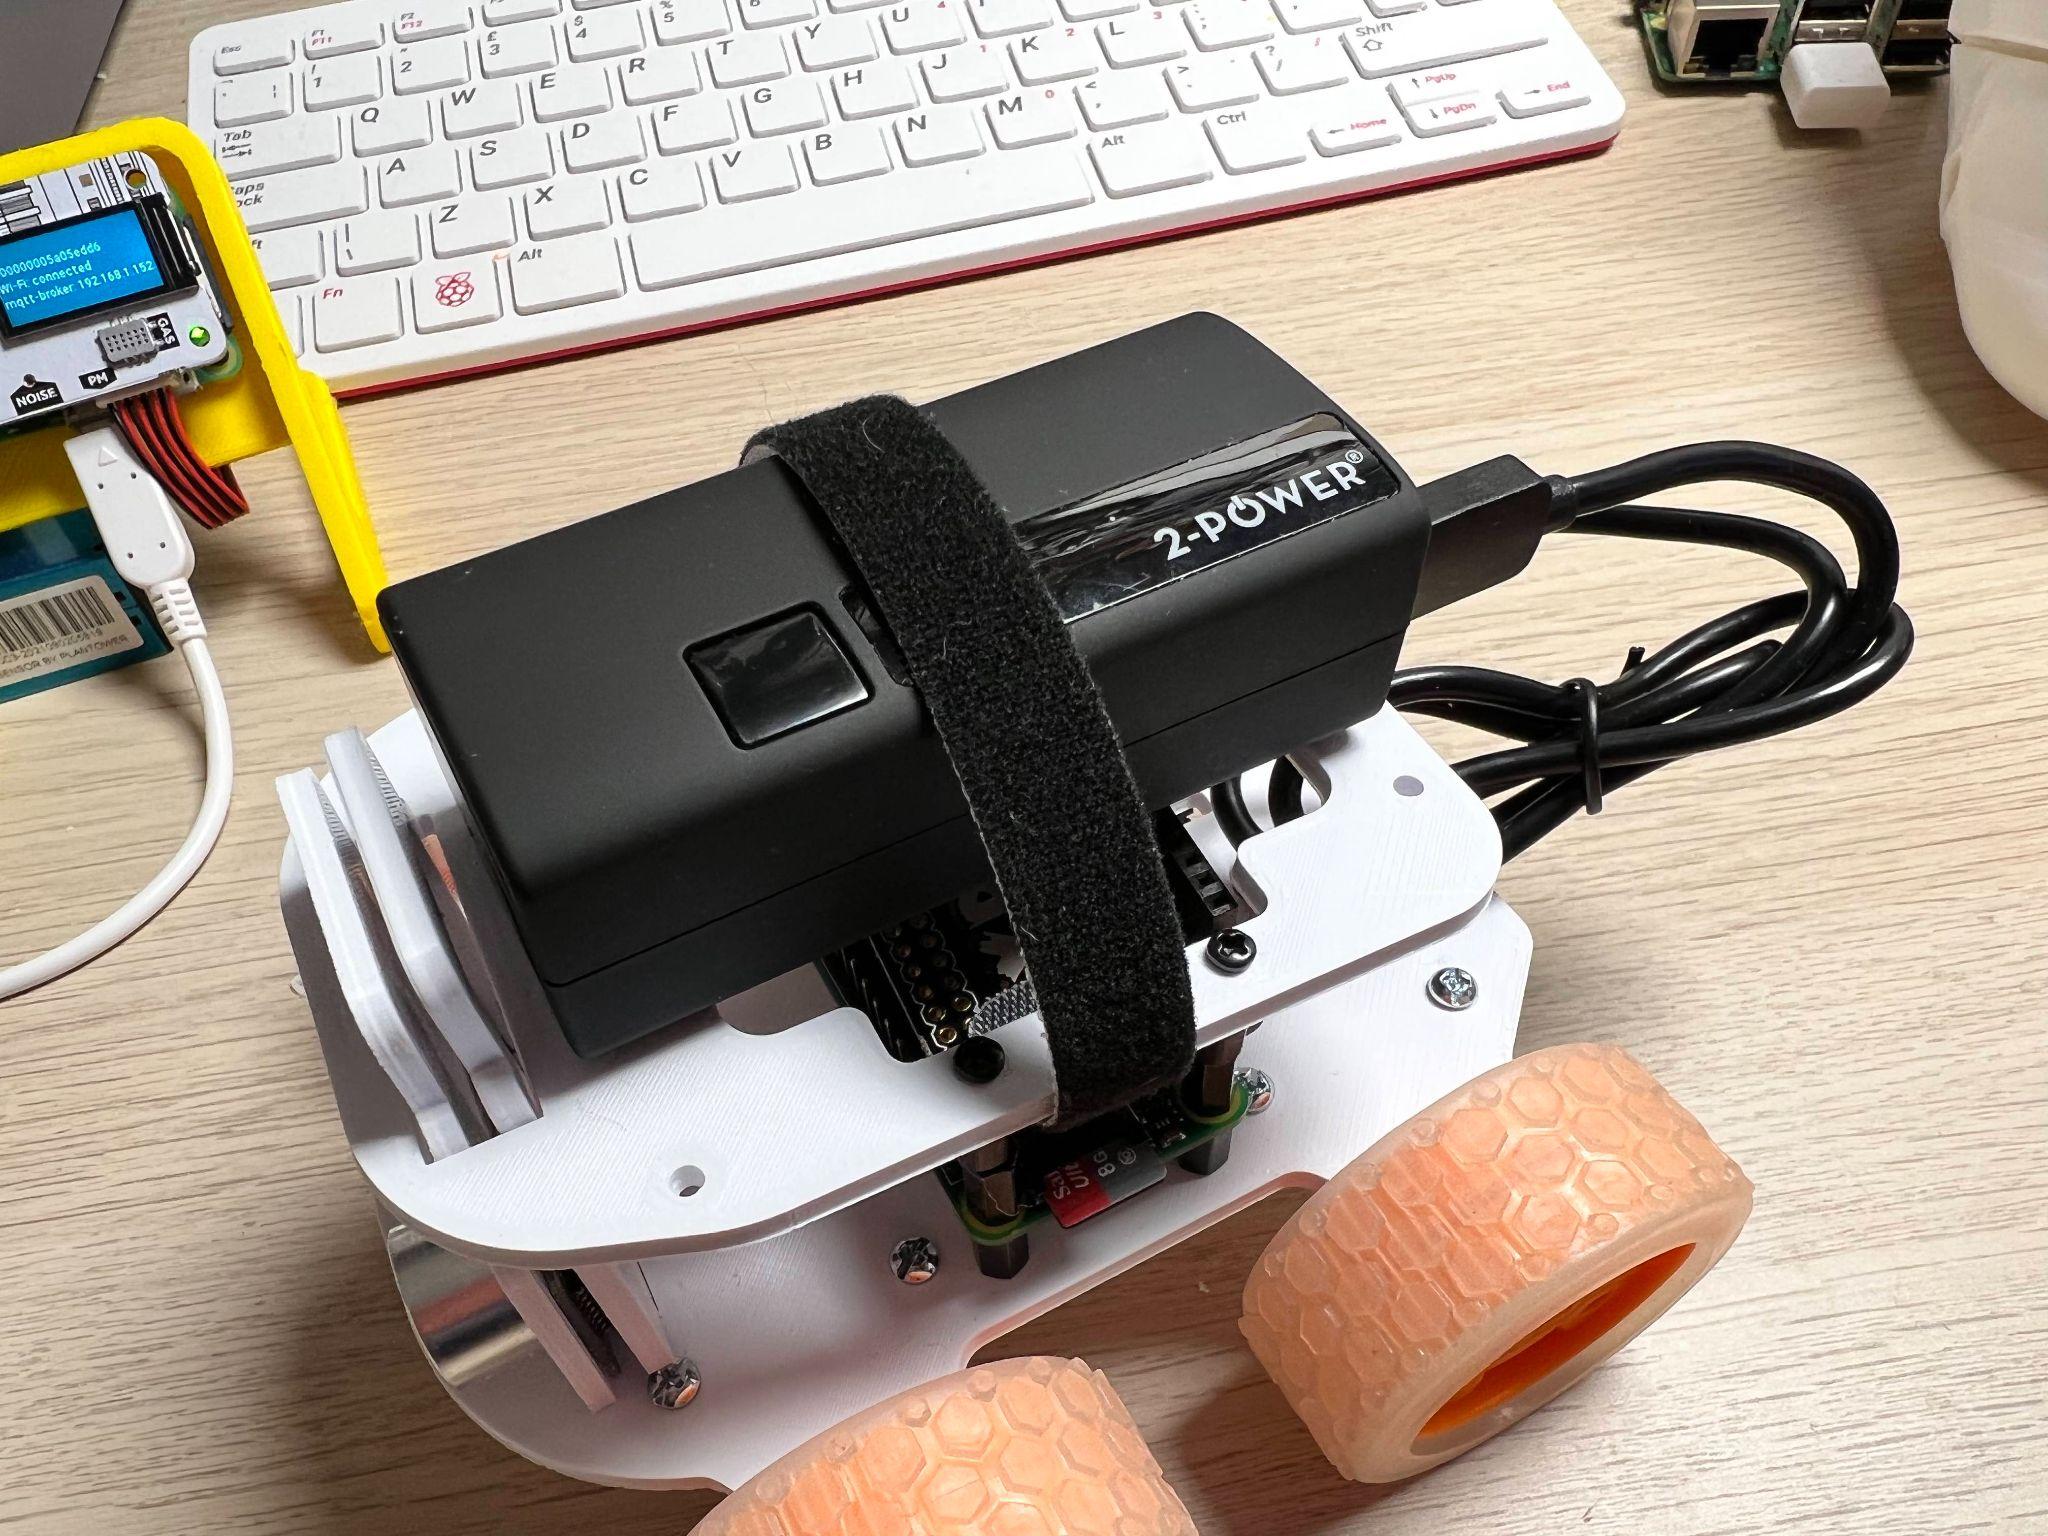 3D printed Raspberry Pi robot